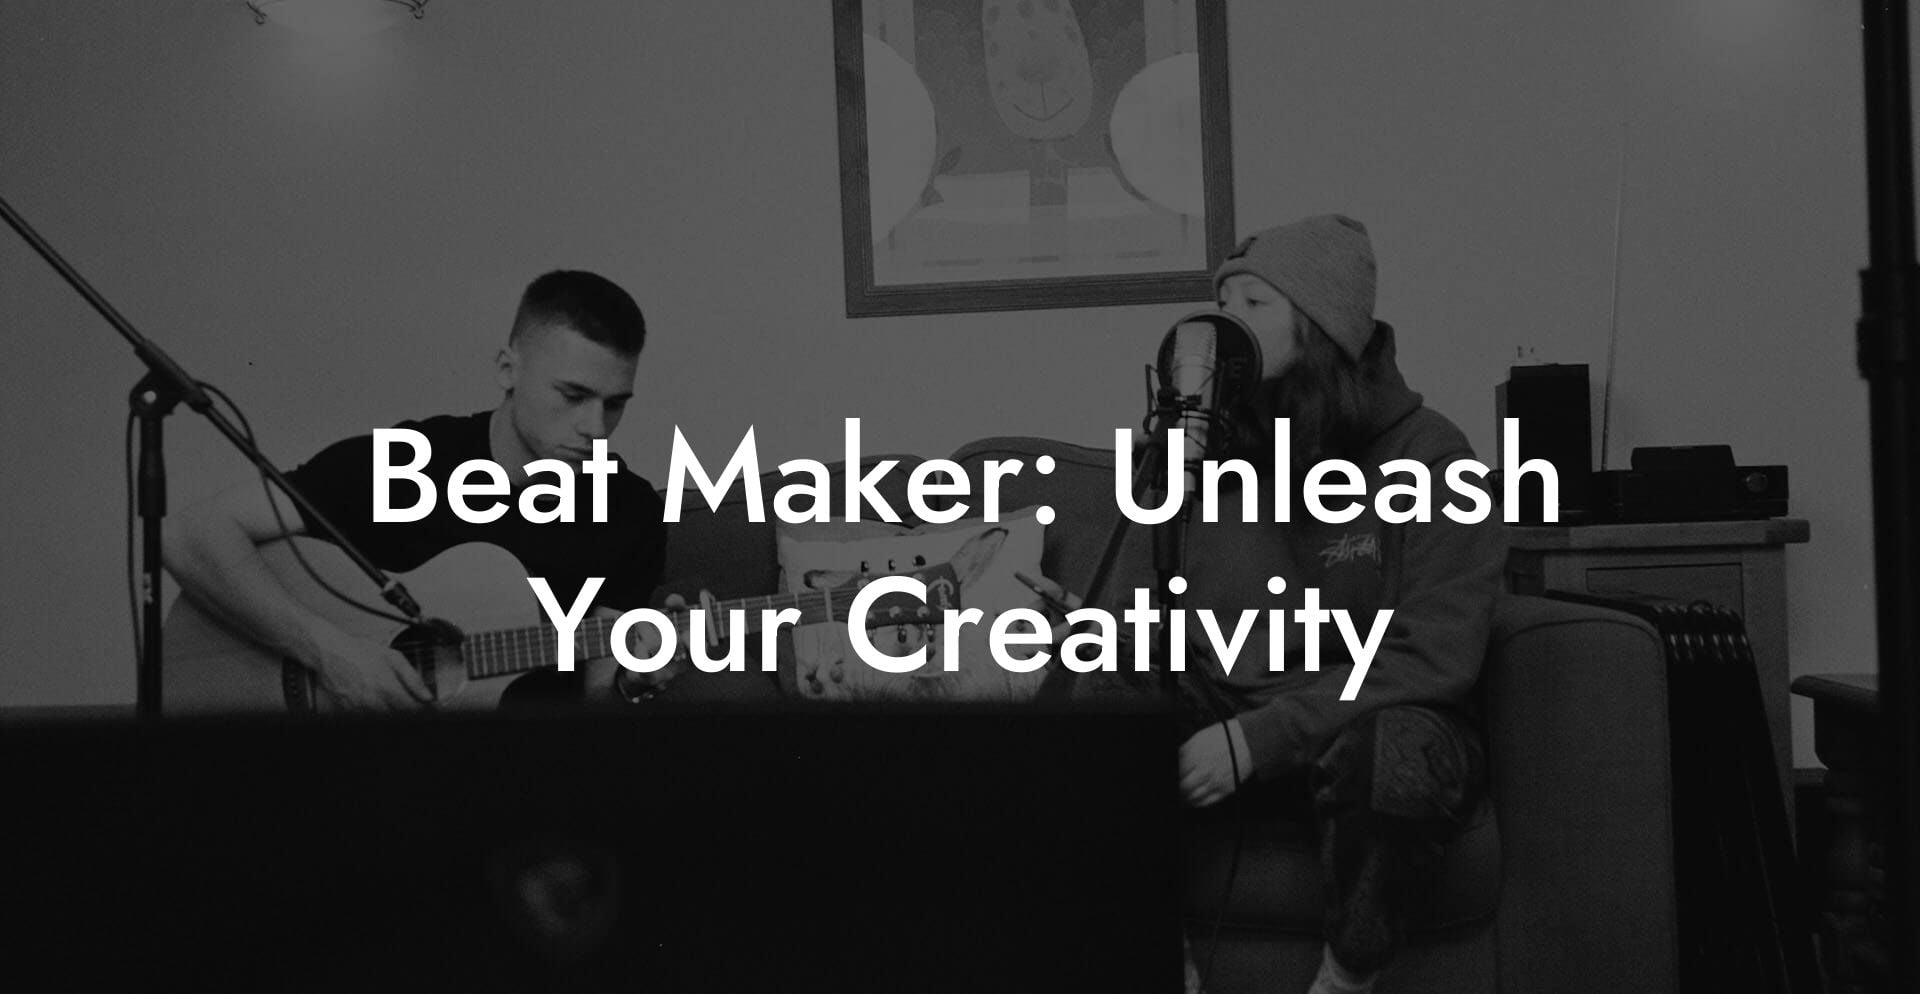 beat maker unleash your creativity lyric assistant